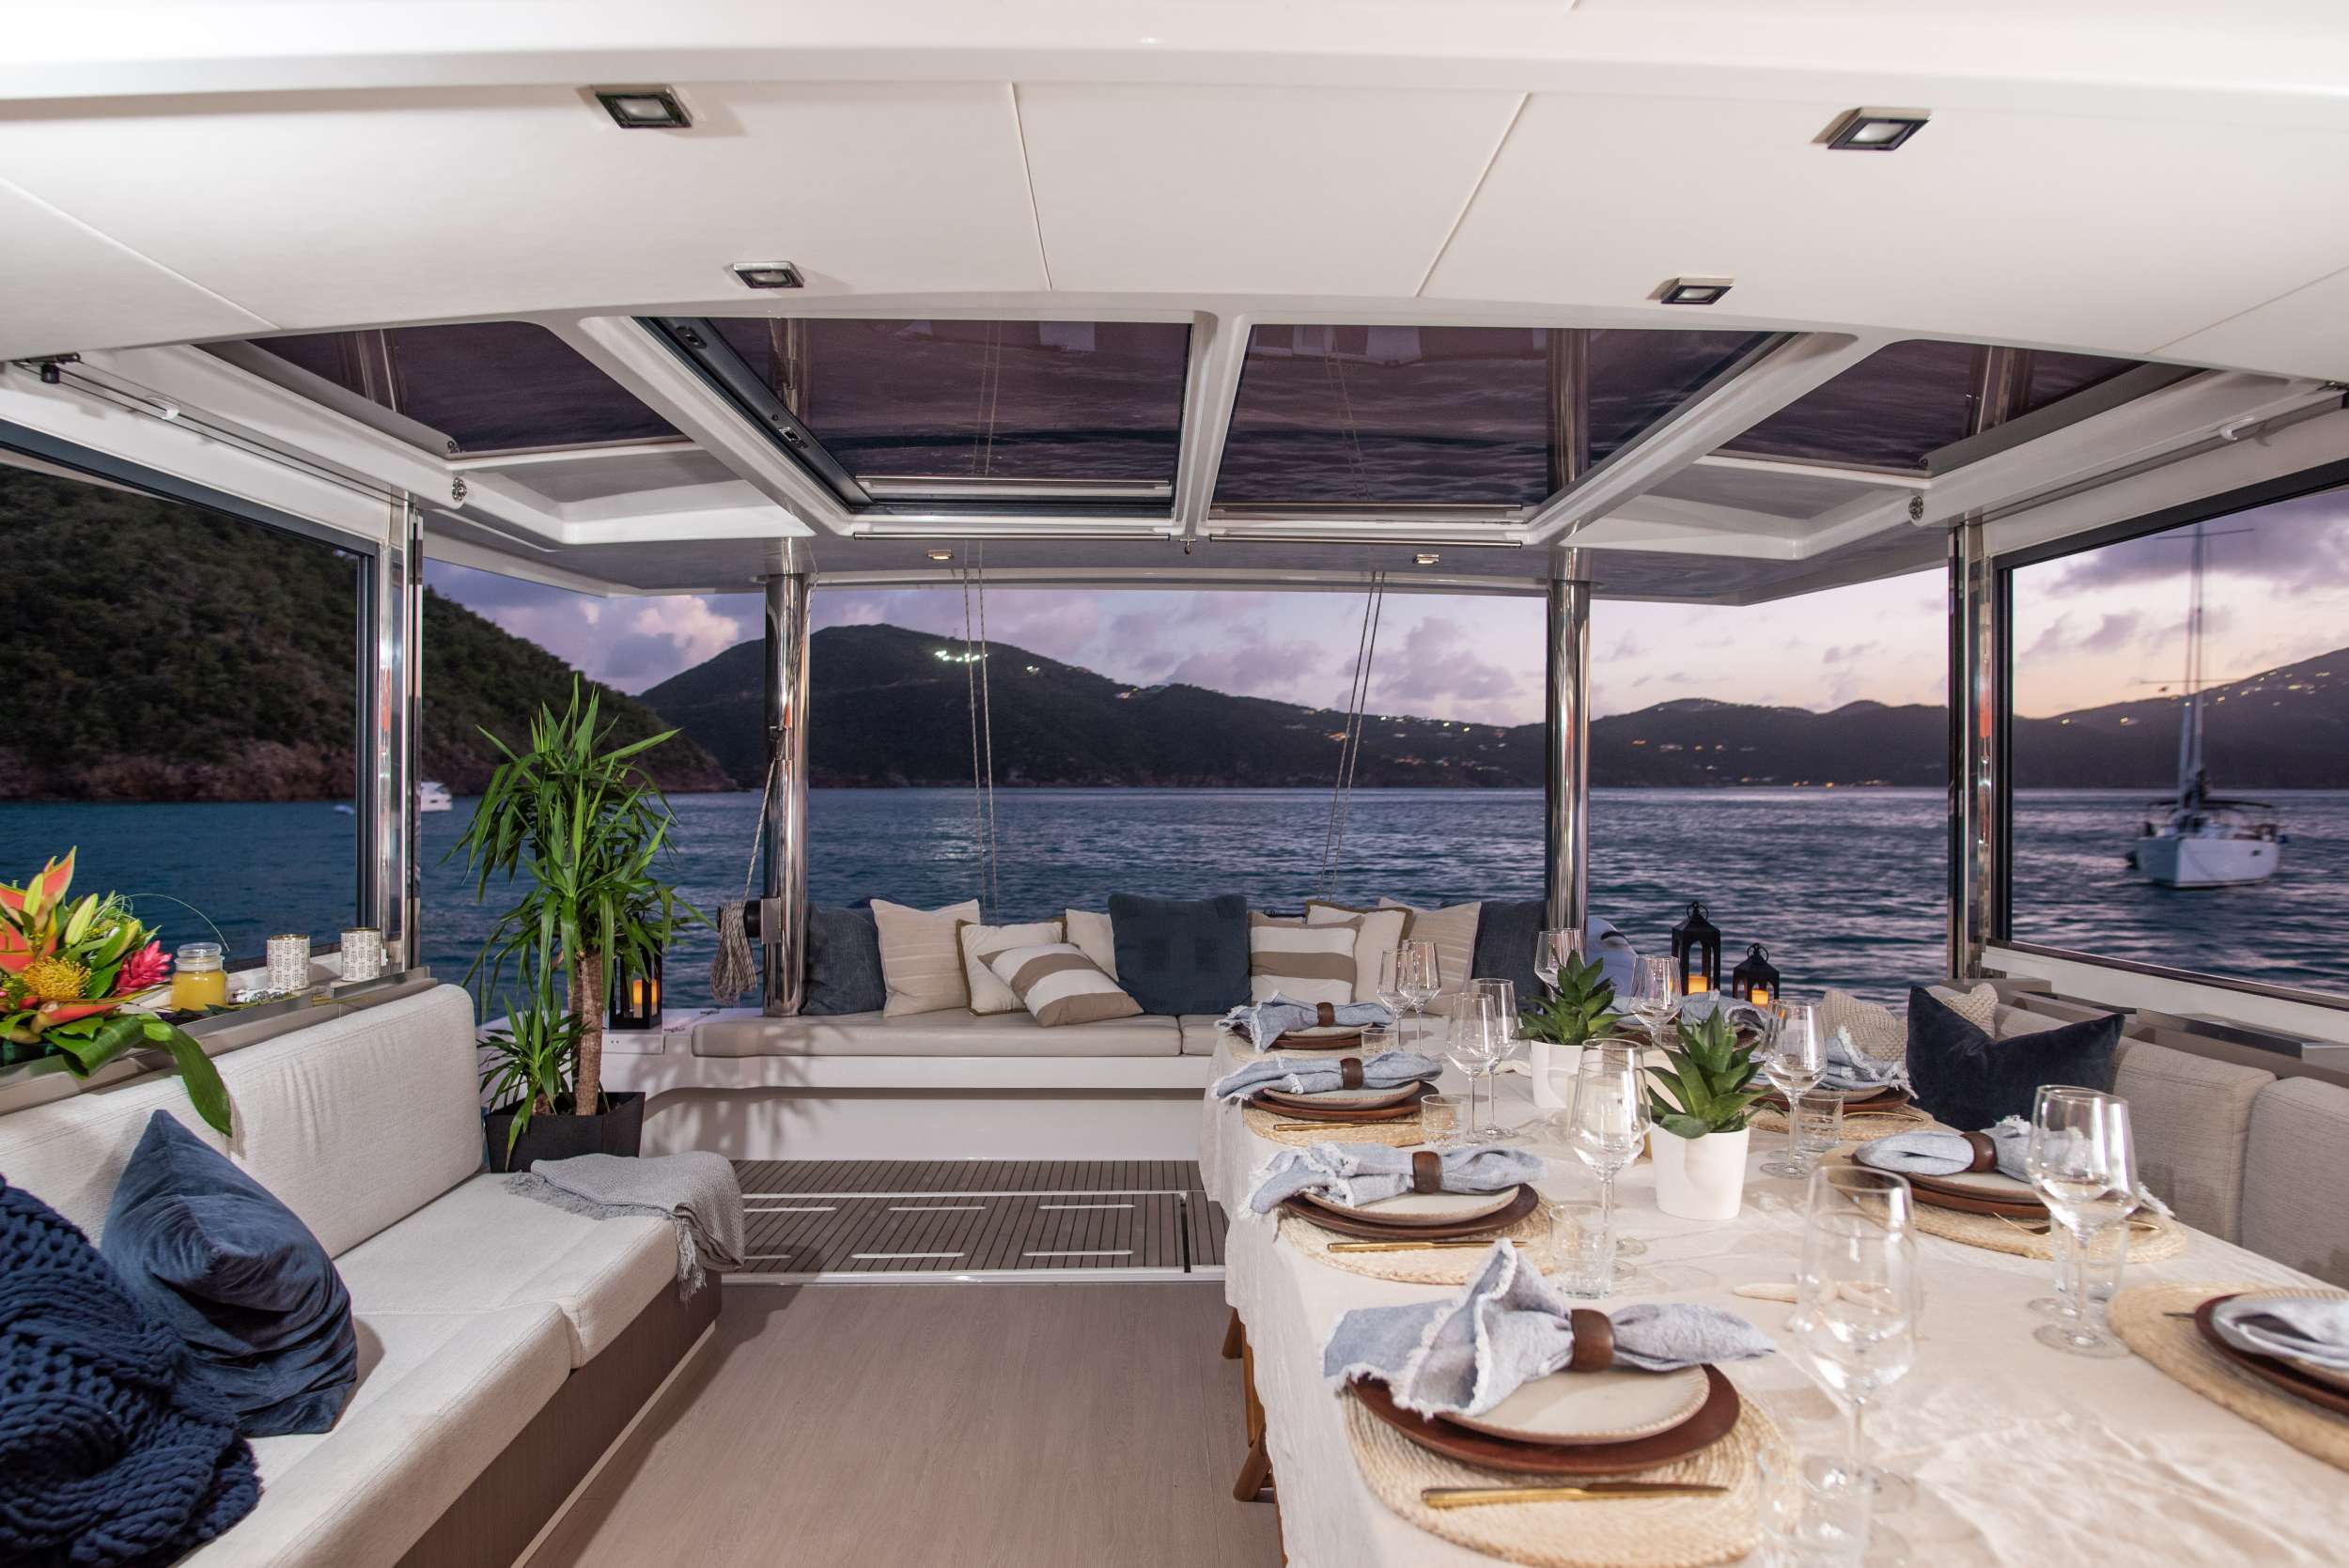 SUN DAZE 5.4 - Luxury yacht charter St Martin & Boat hire in Caribbean 3